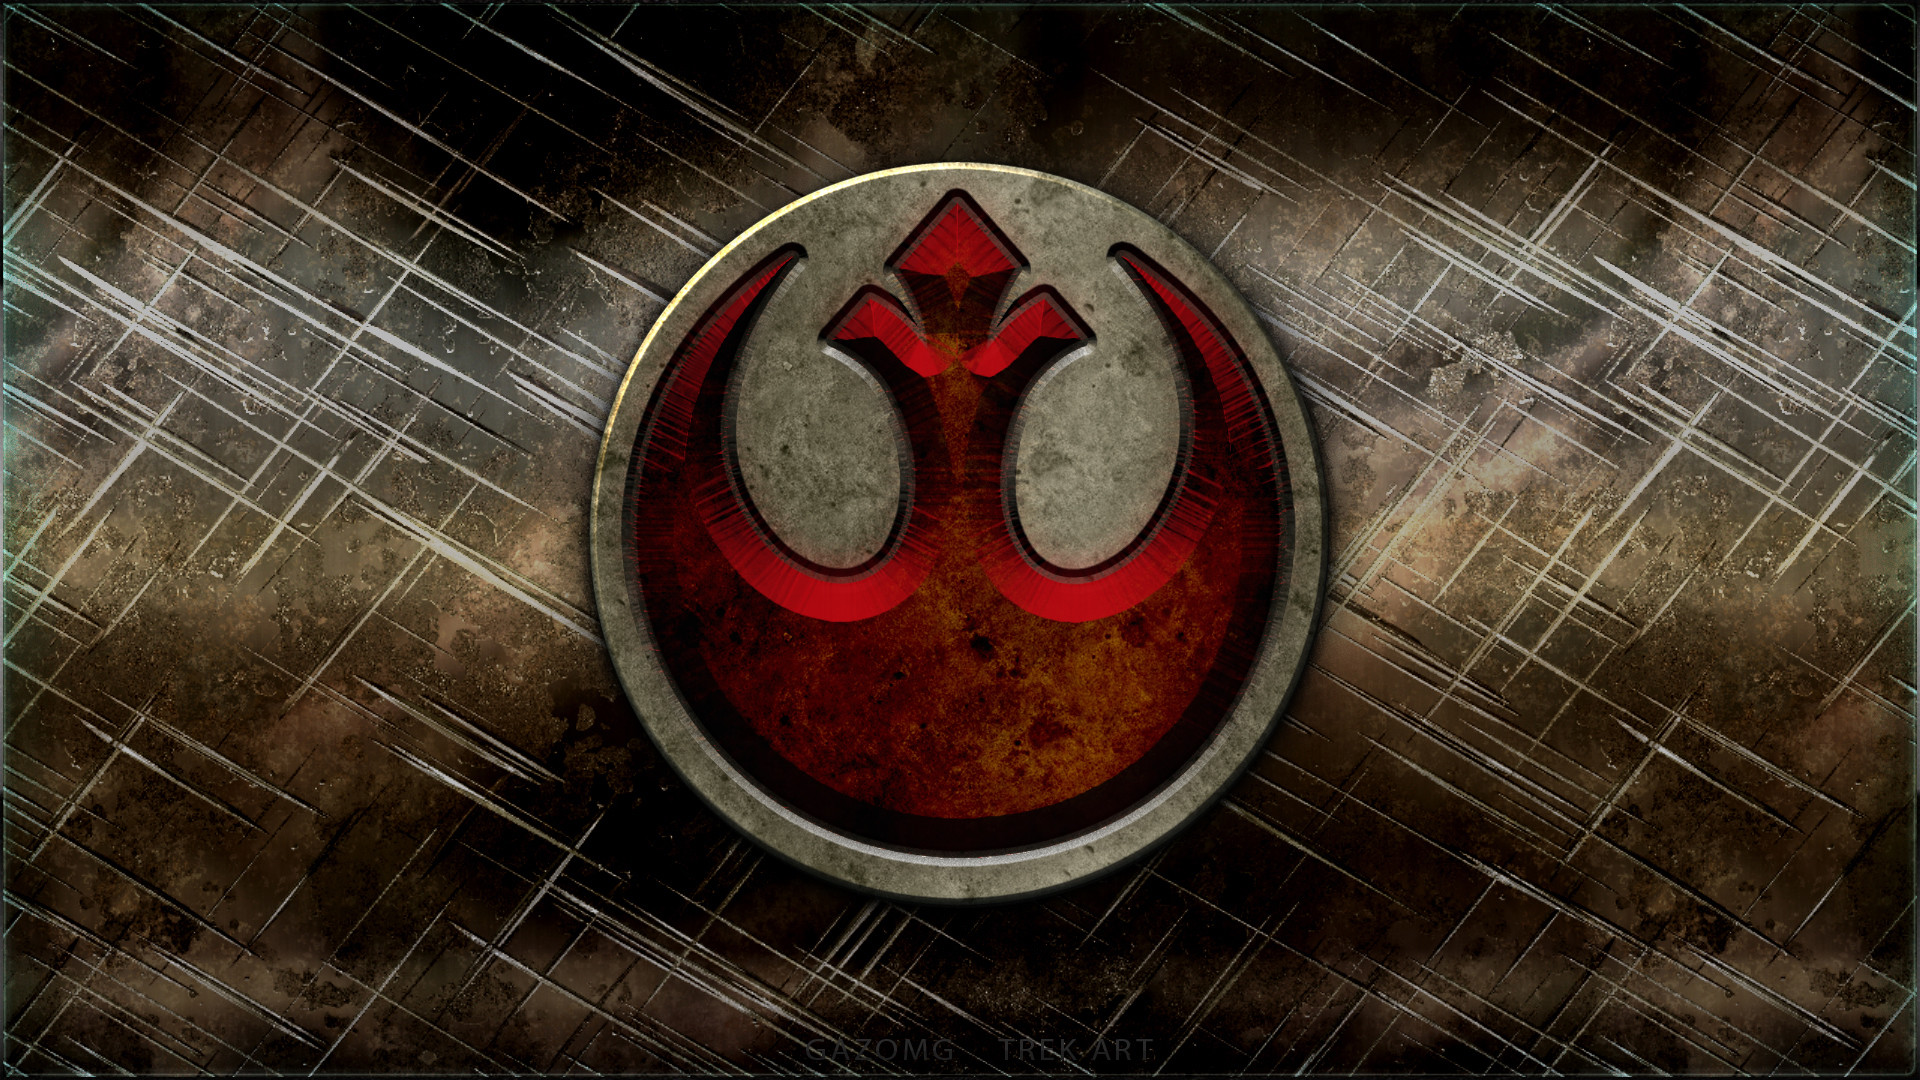 Star Wars Rebel Alliance Logo by gazomg